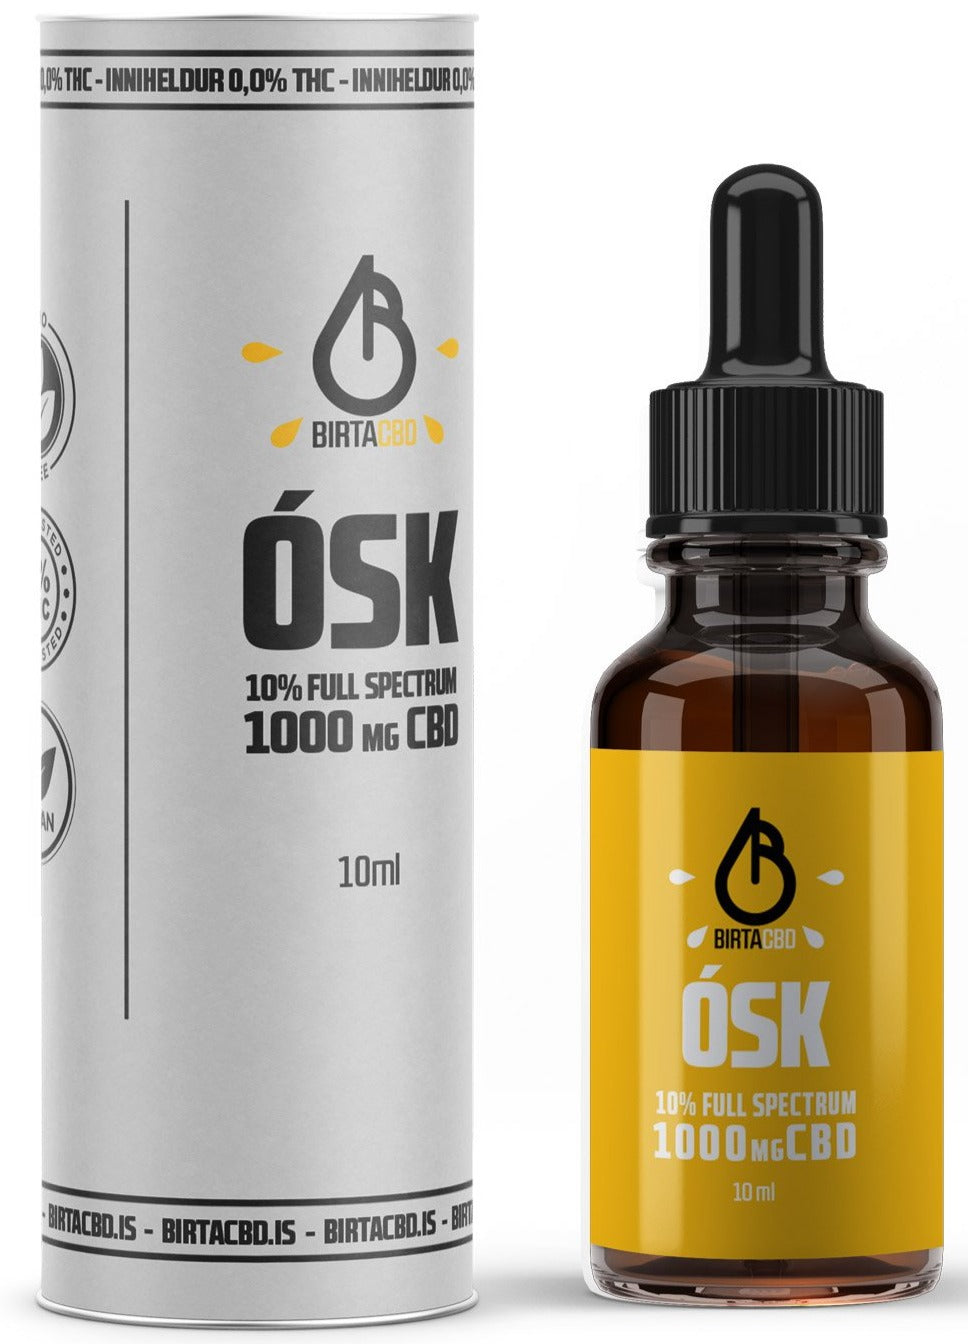 ÓSK - 10% Full Spectrum CBD olía